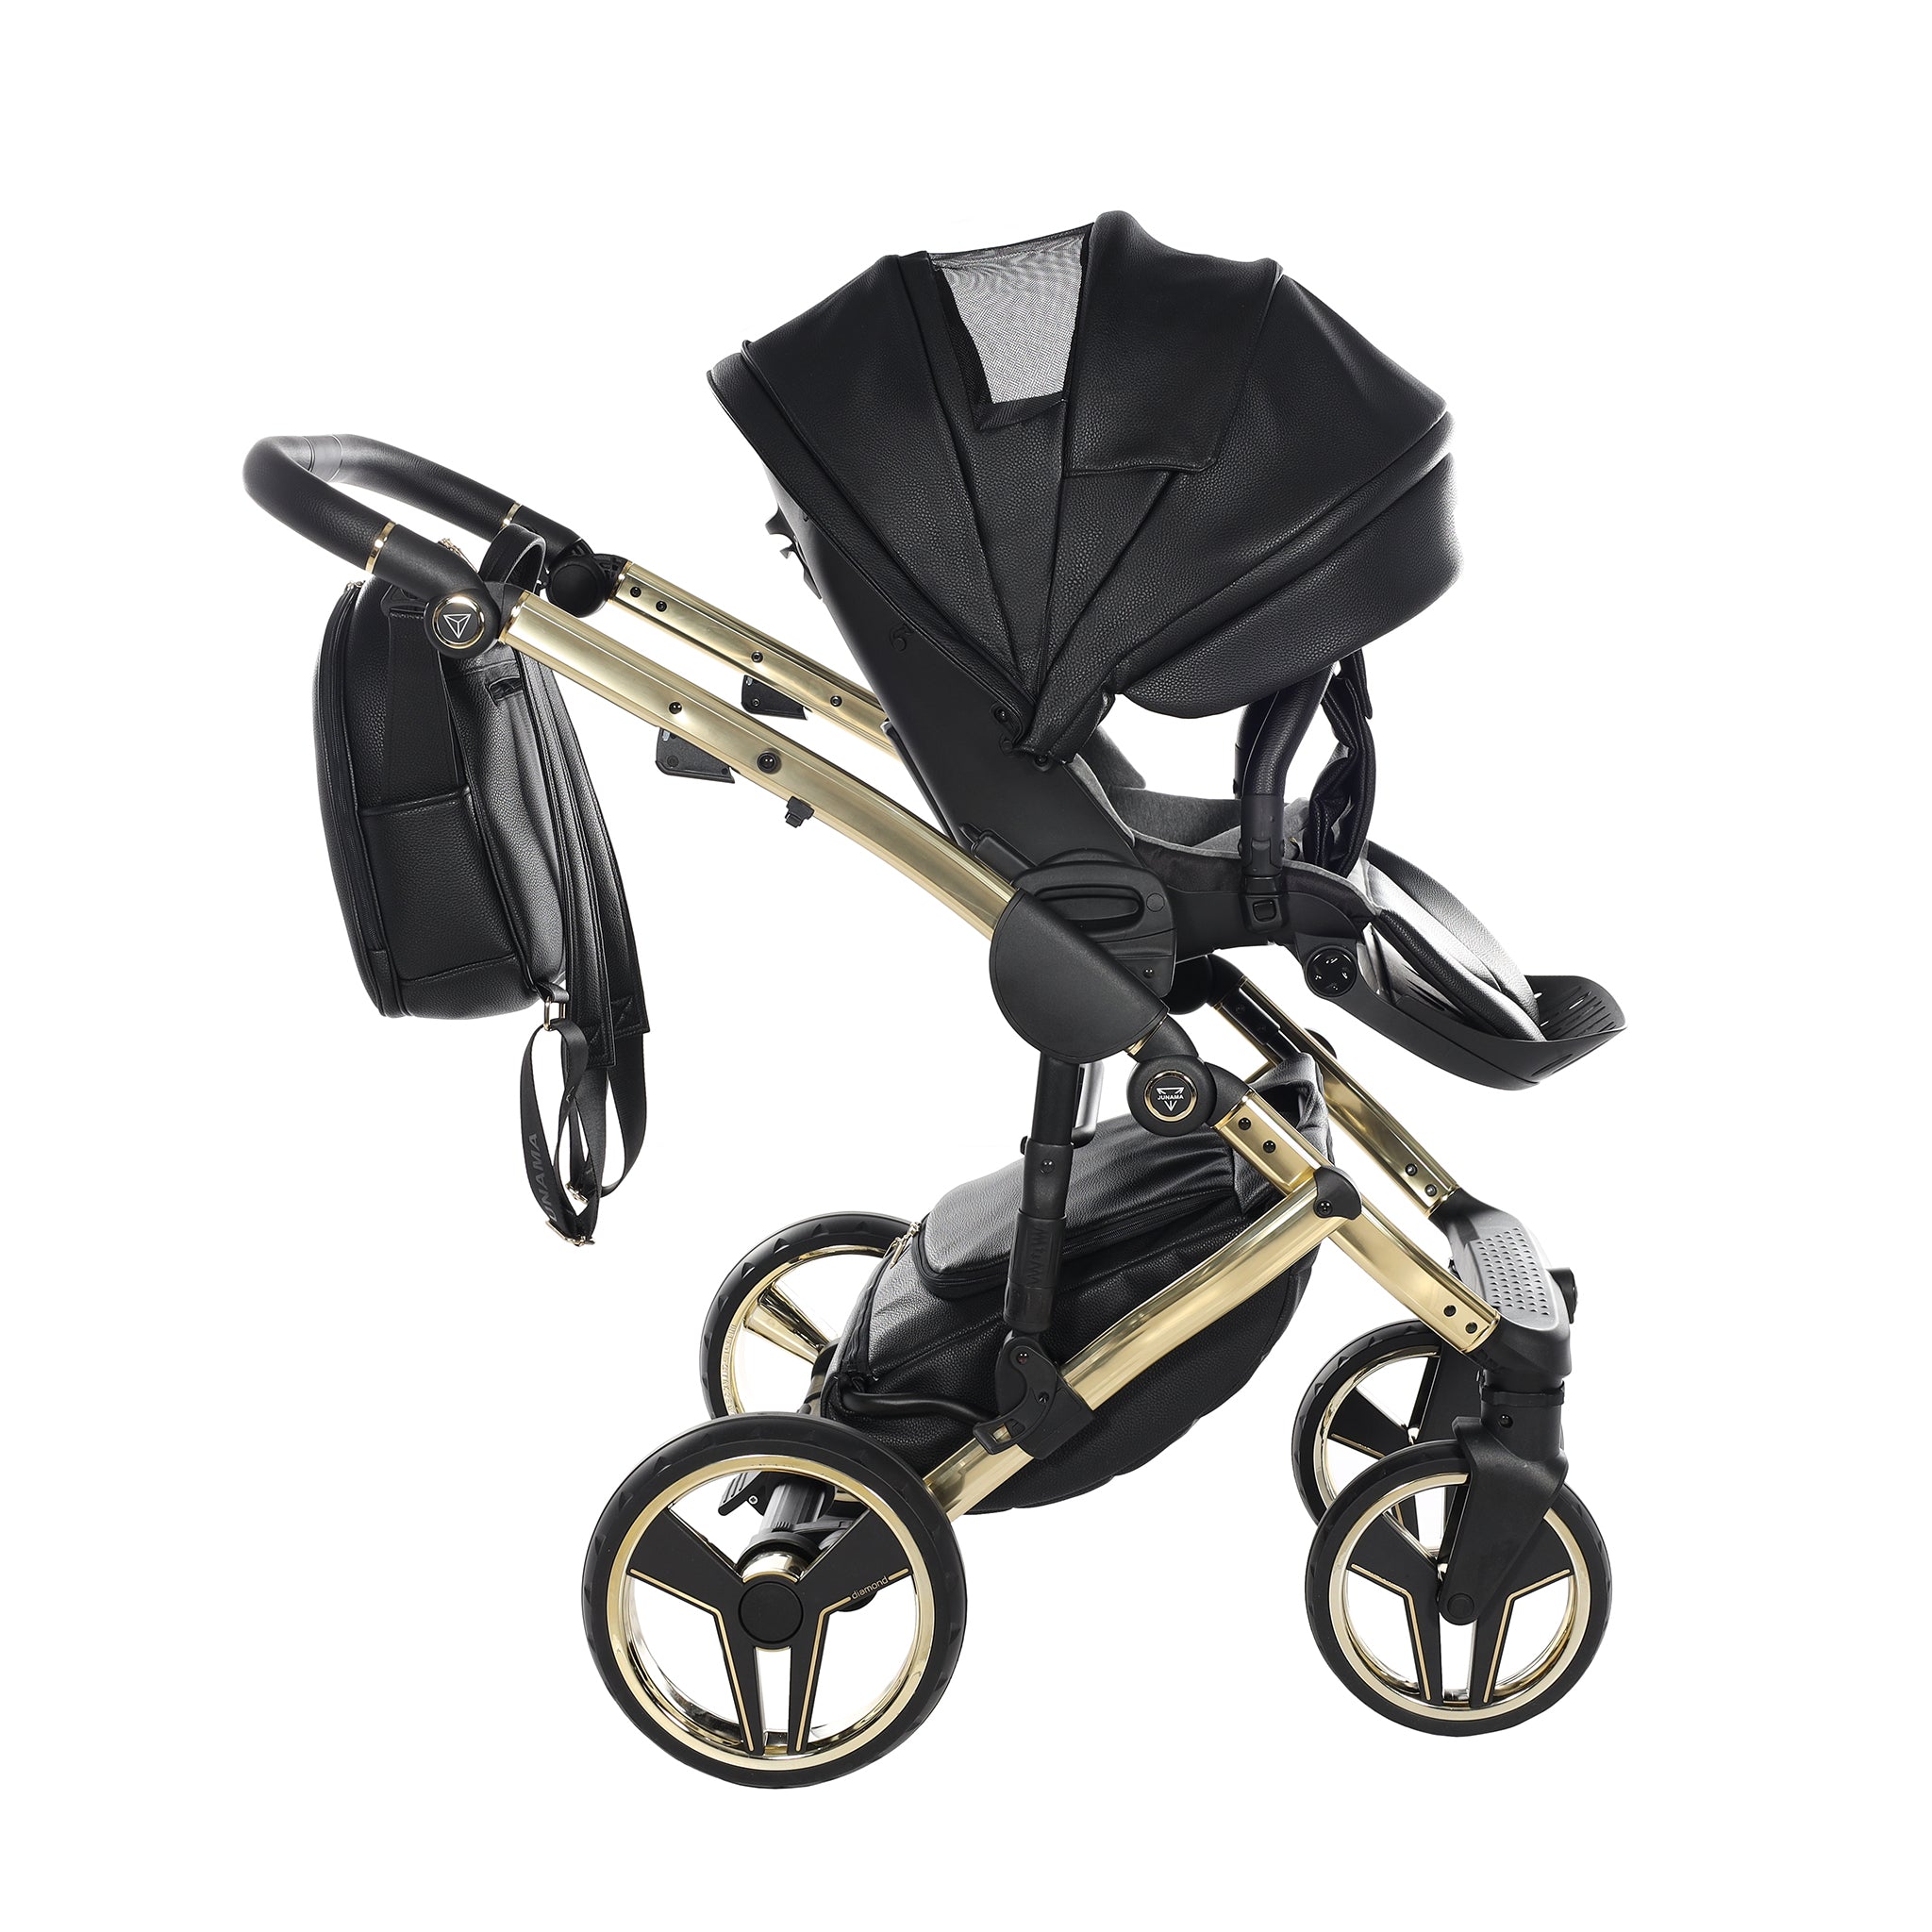 Junama Handcraft, baby prams or stroller 2 in 1 - Black and gold, number: JUNHC05